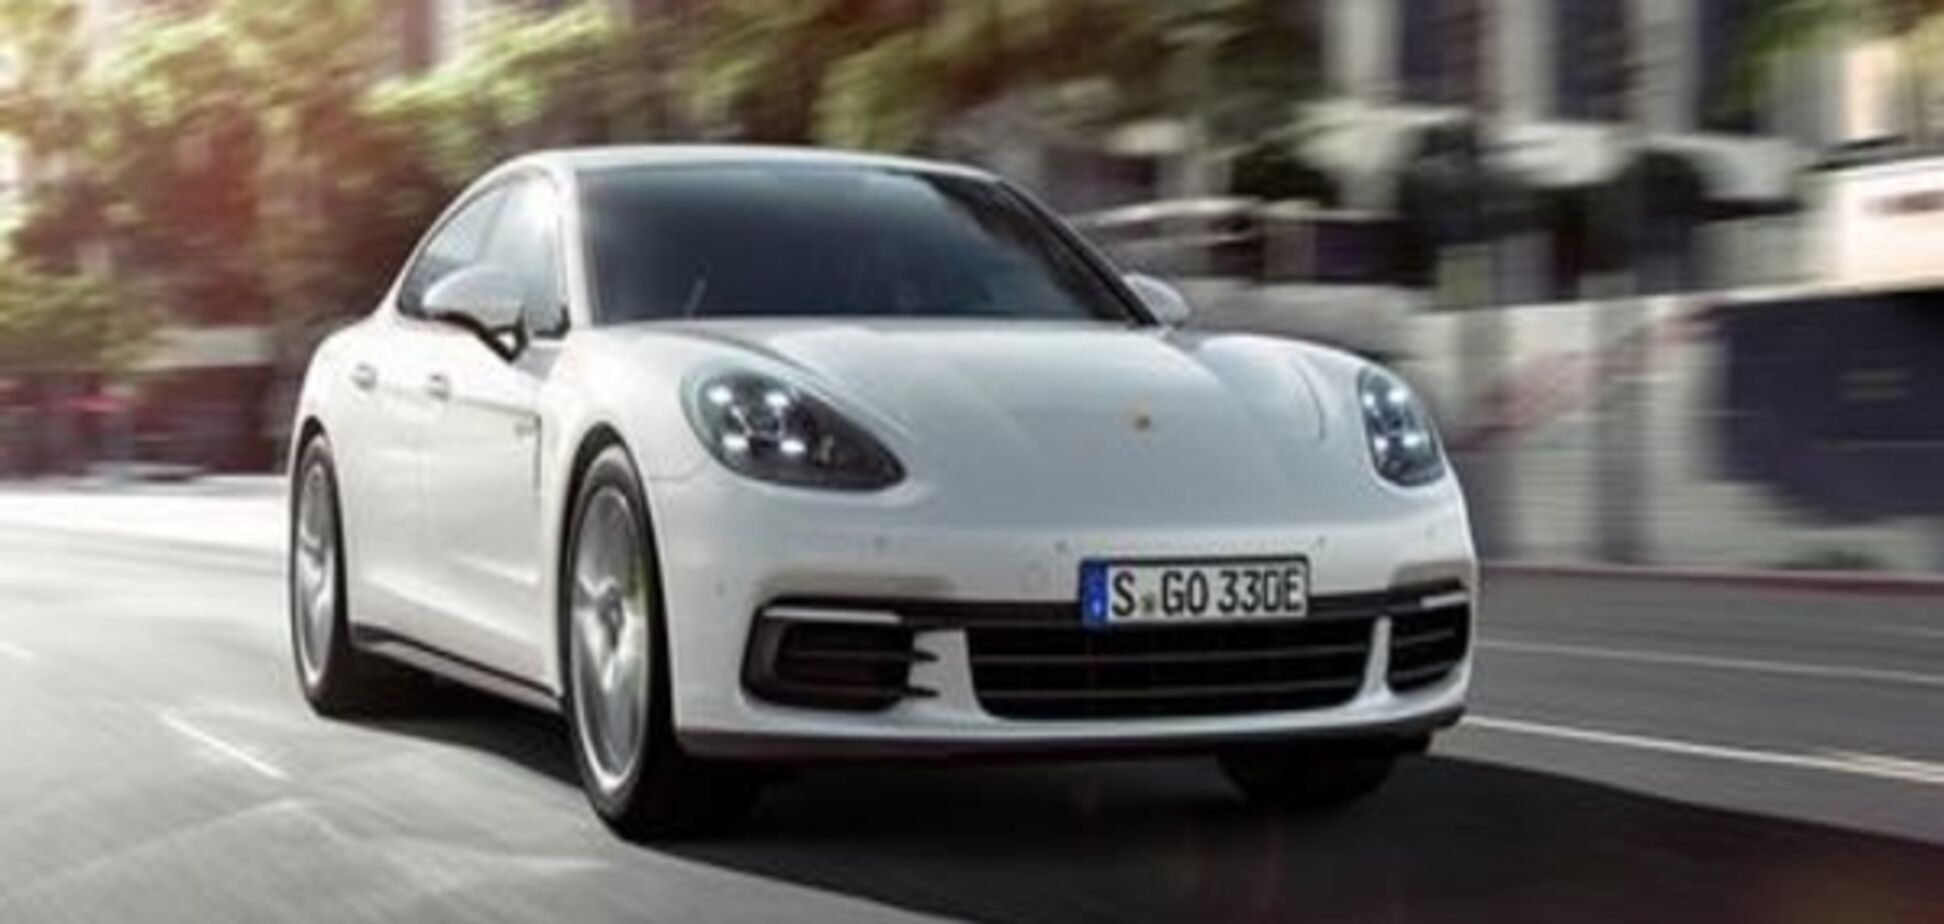 Криза на автомобільному ринку РФ позначилася на Porsche